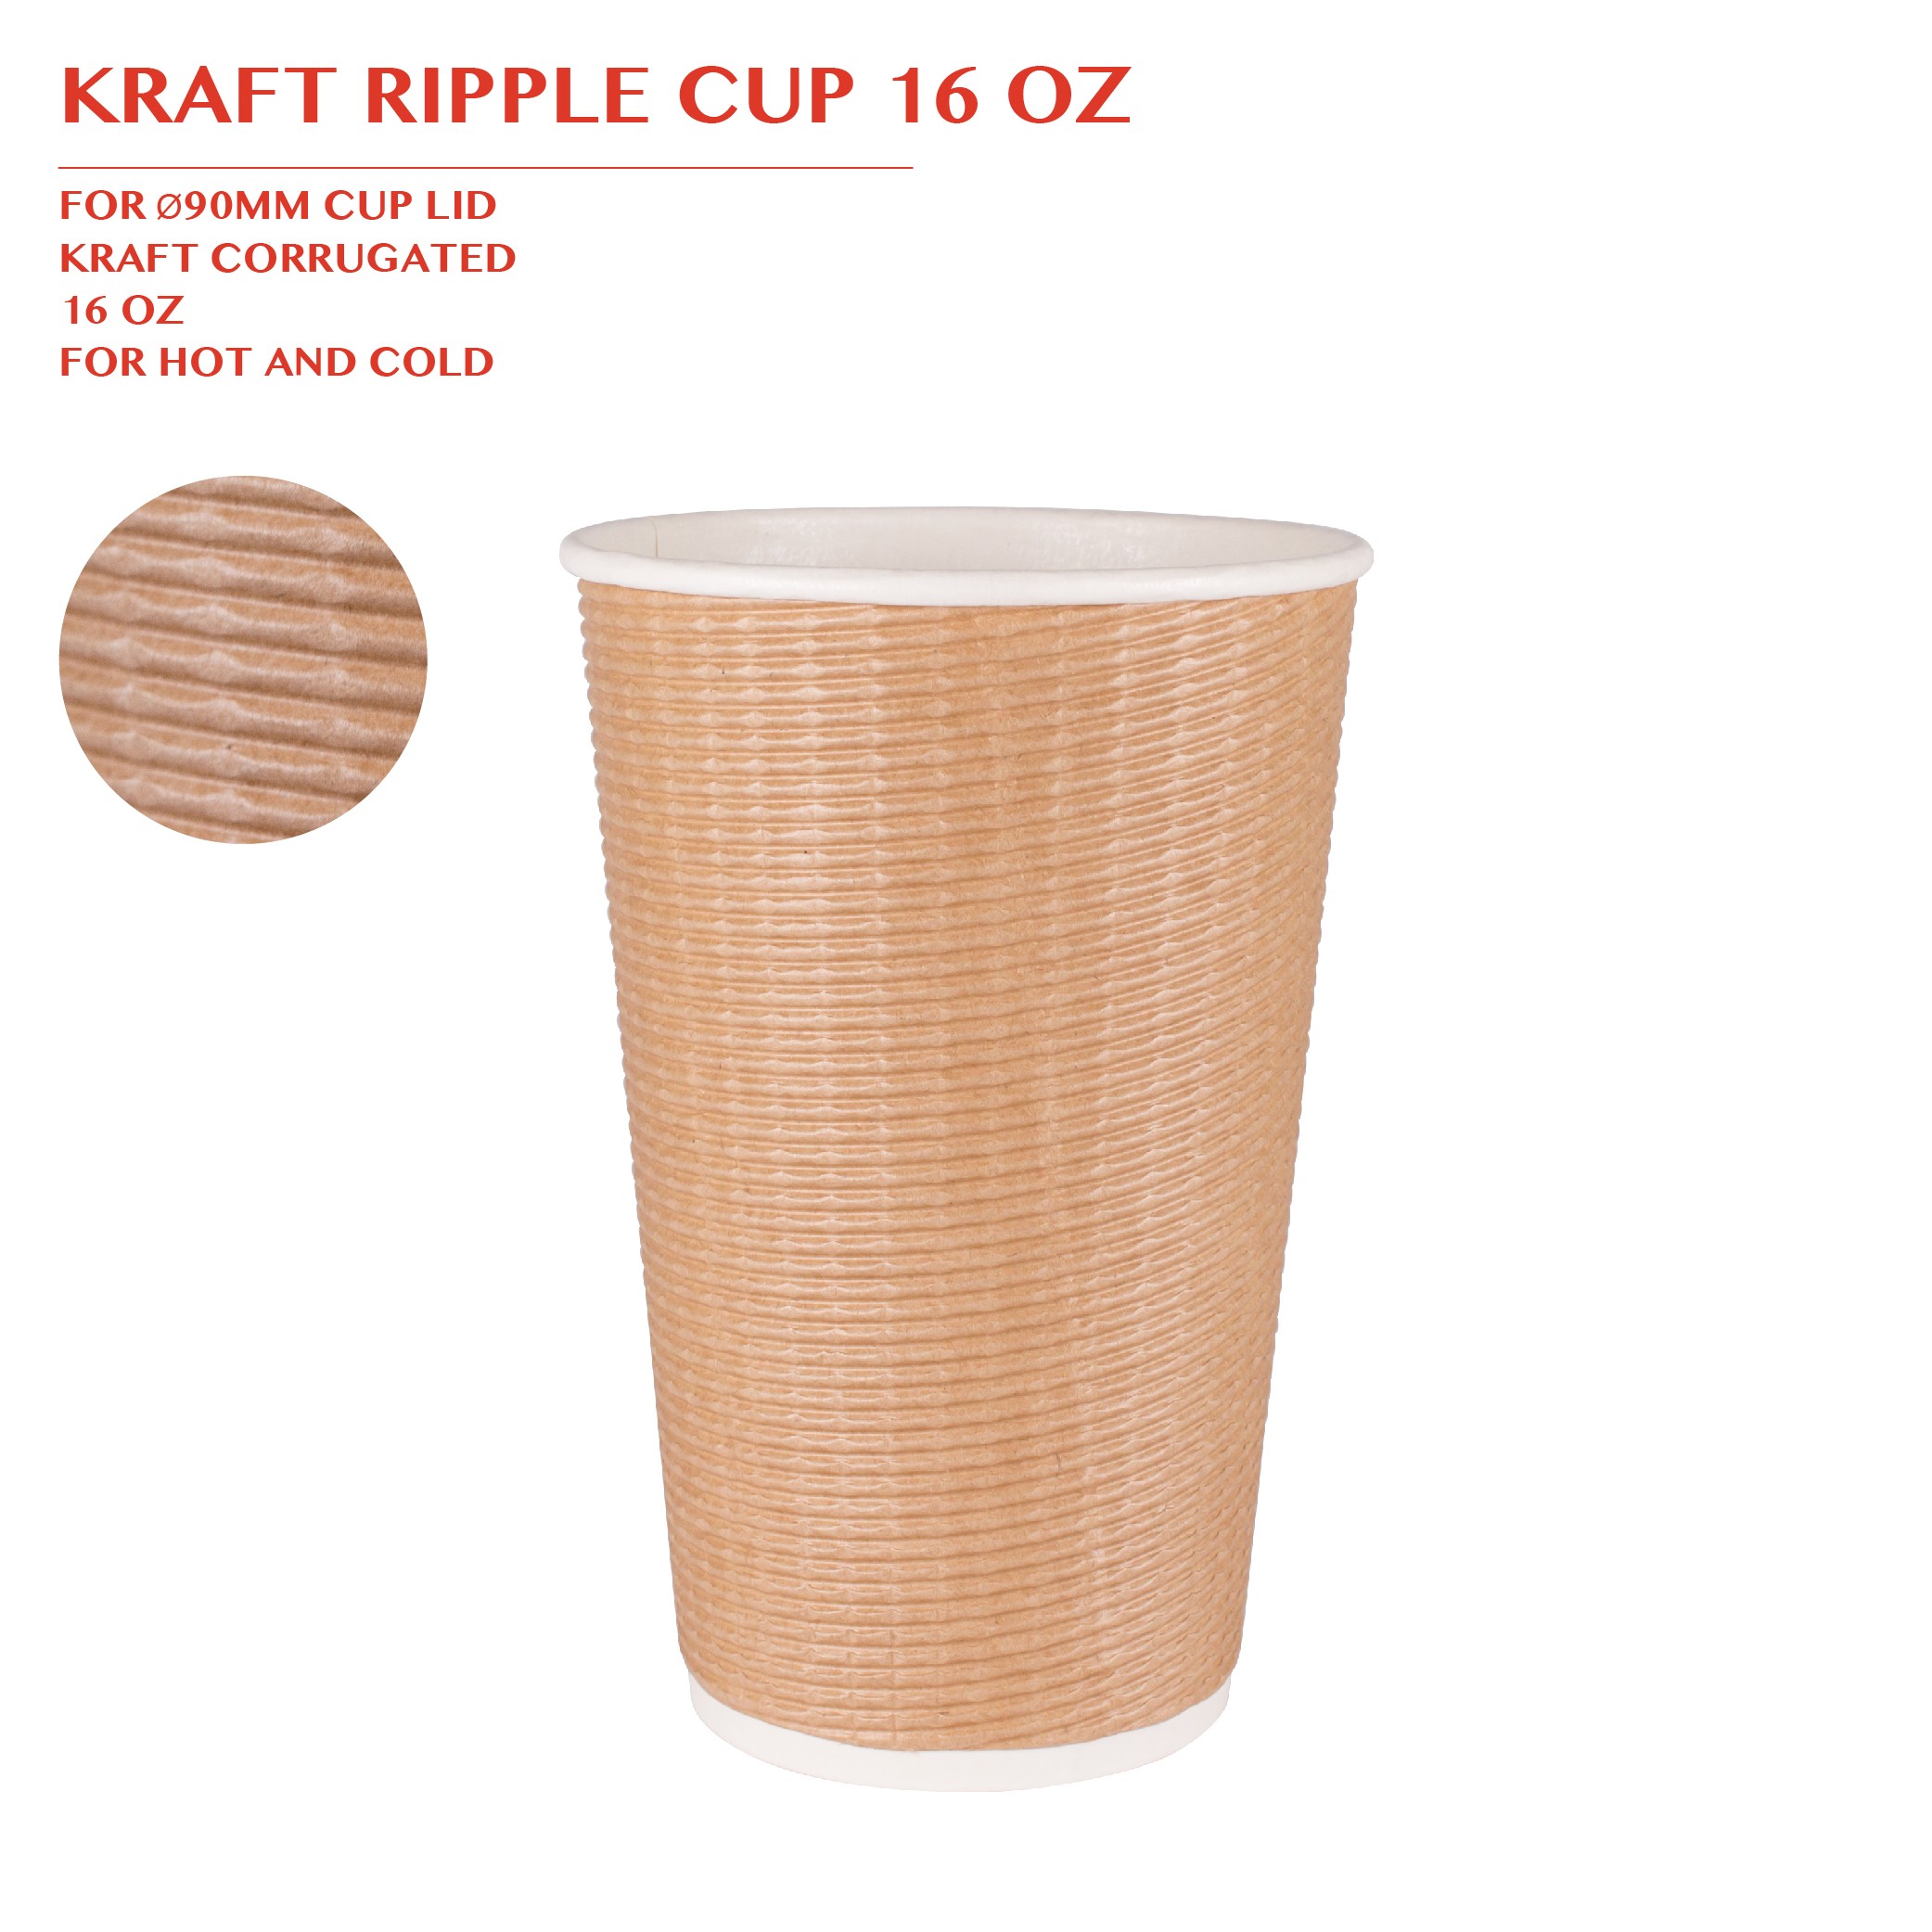 PRE-ORDER KRAFT RIPPLE CUP 16 OZ 500PCS/CTN